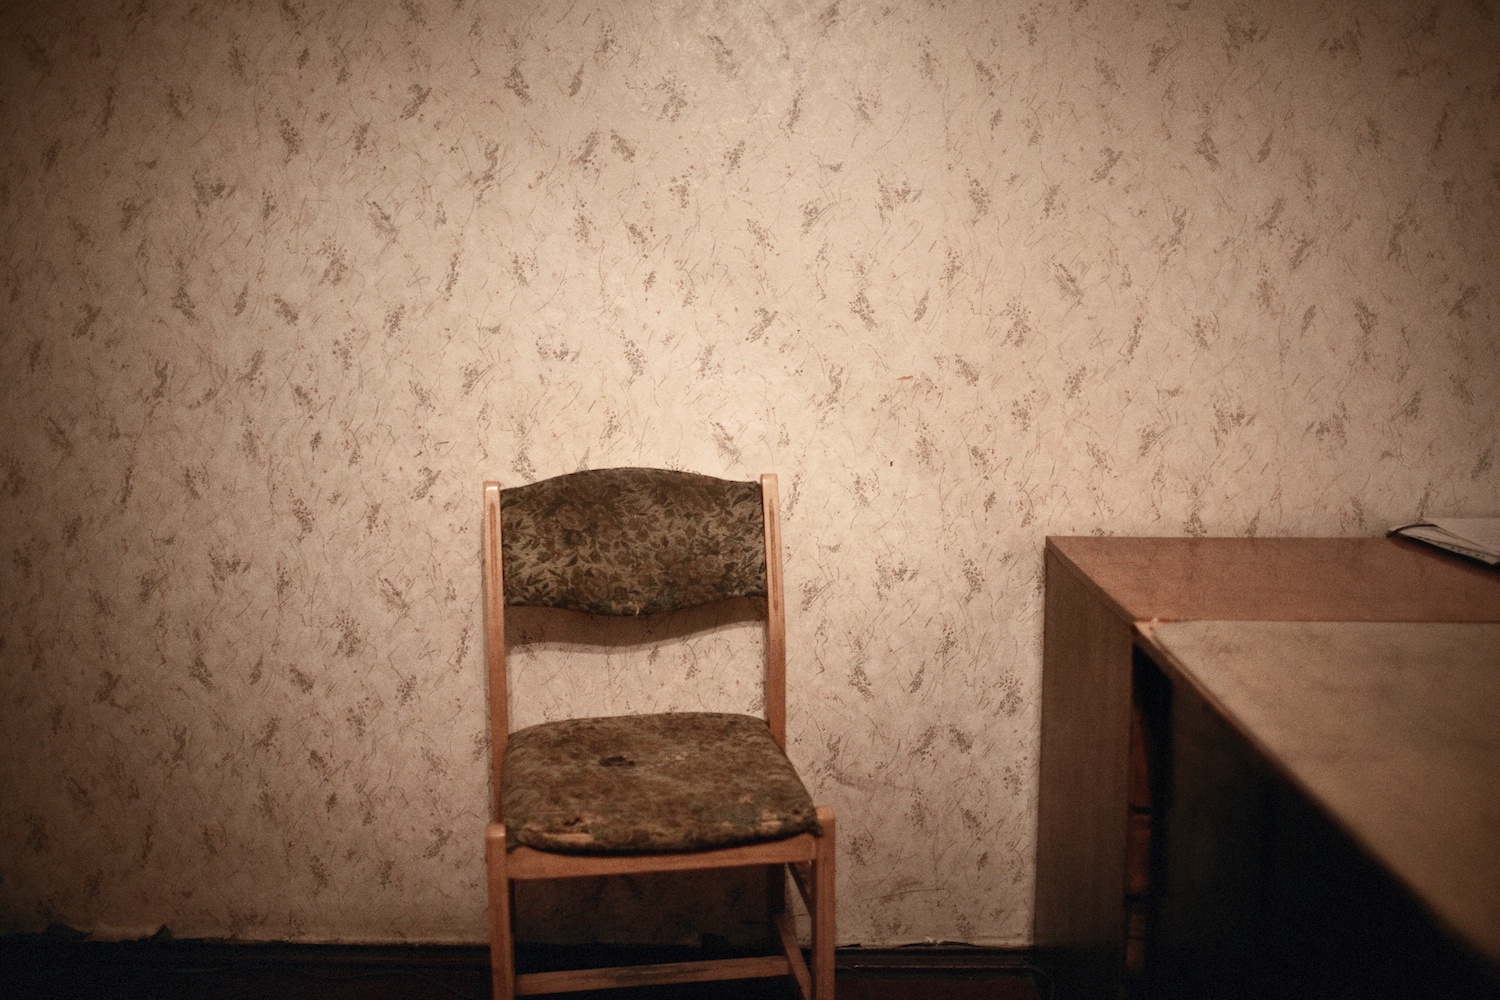 Interrogations Series, 2011